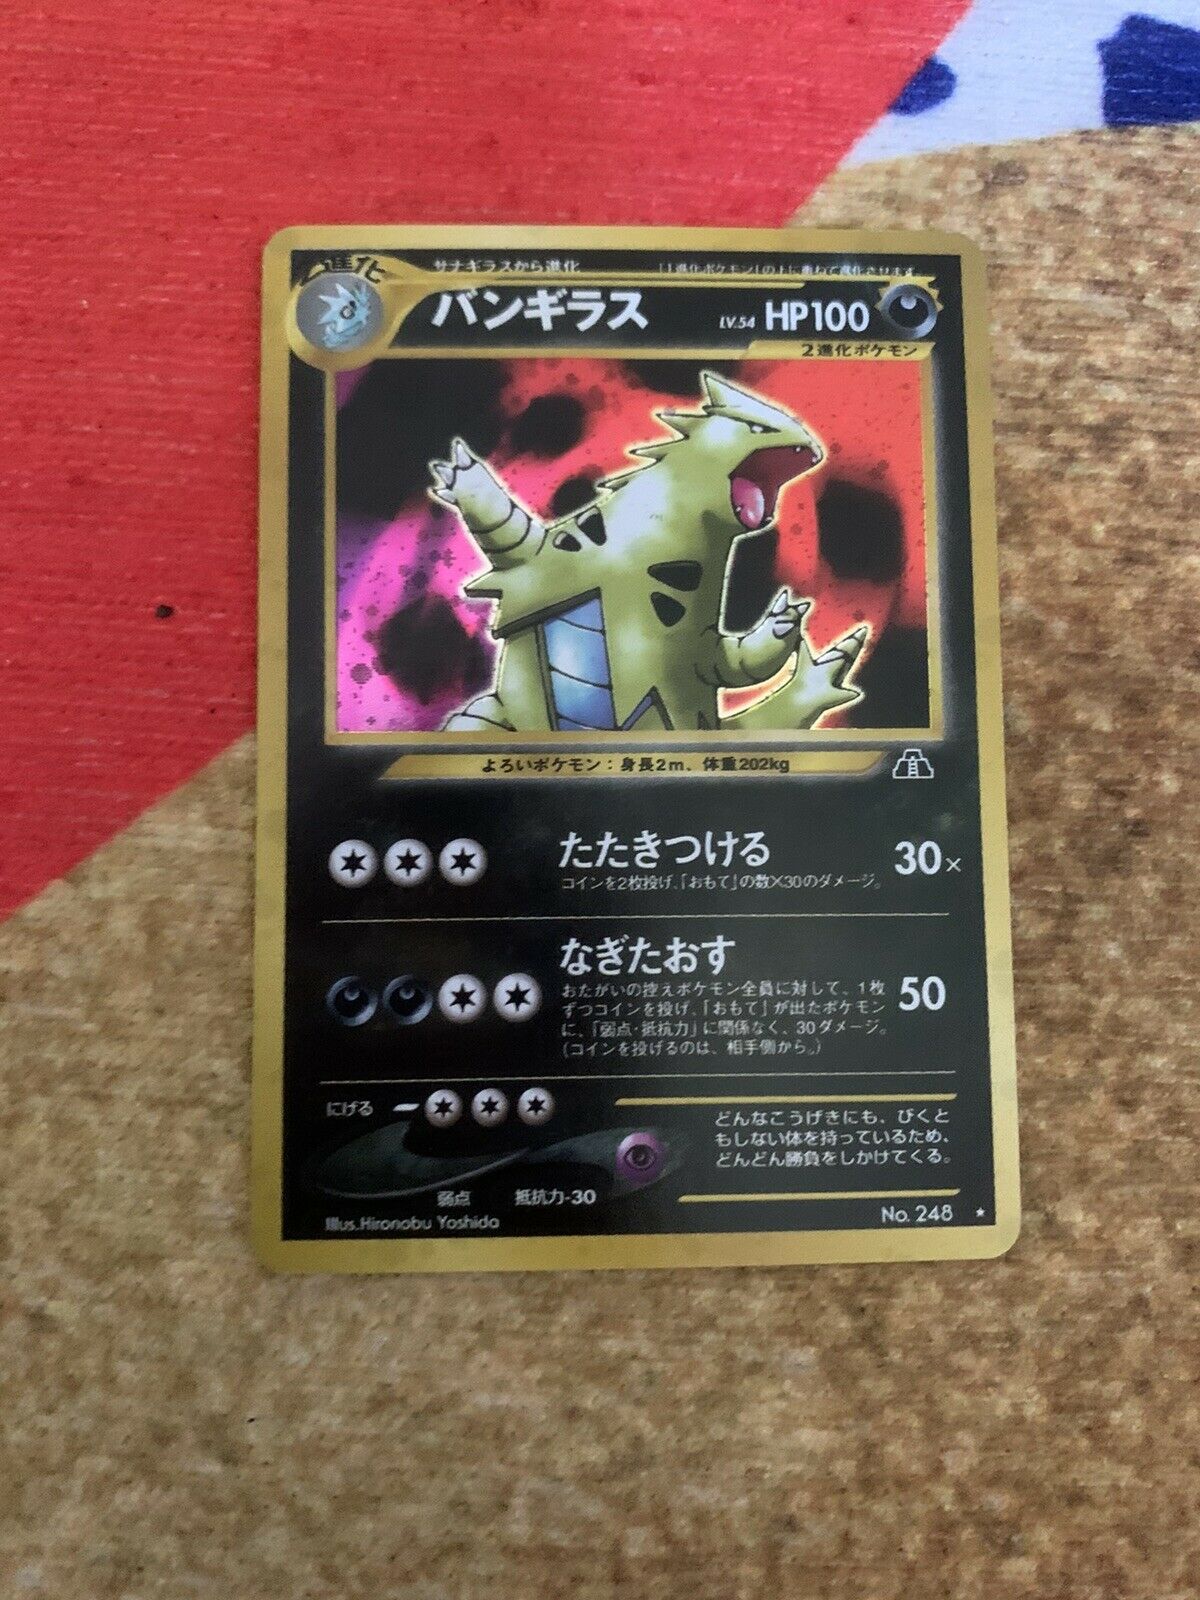 Pokémon TCG Tyranitar Sun & Moon: Celestial Storm 87/168 Reverse Holo Holo Rare - Image 1